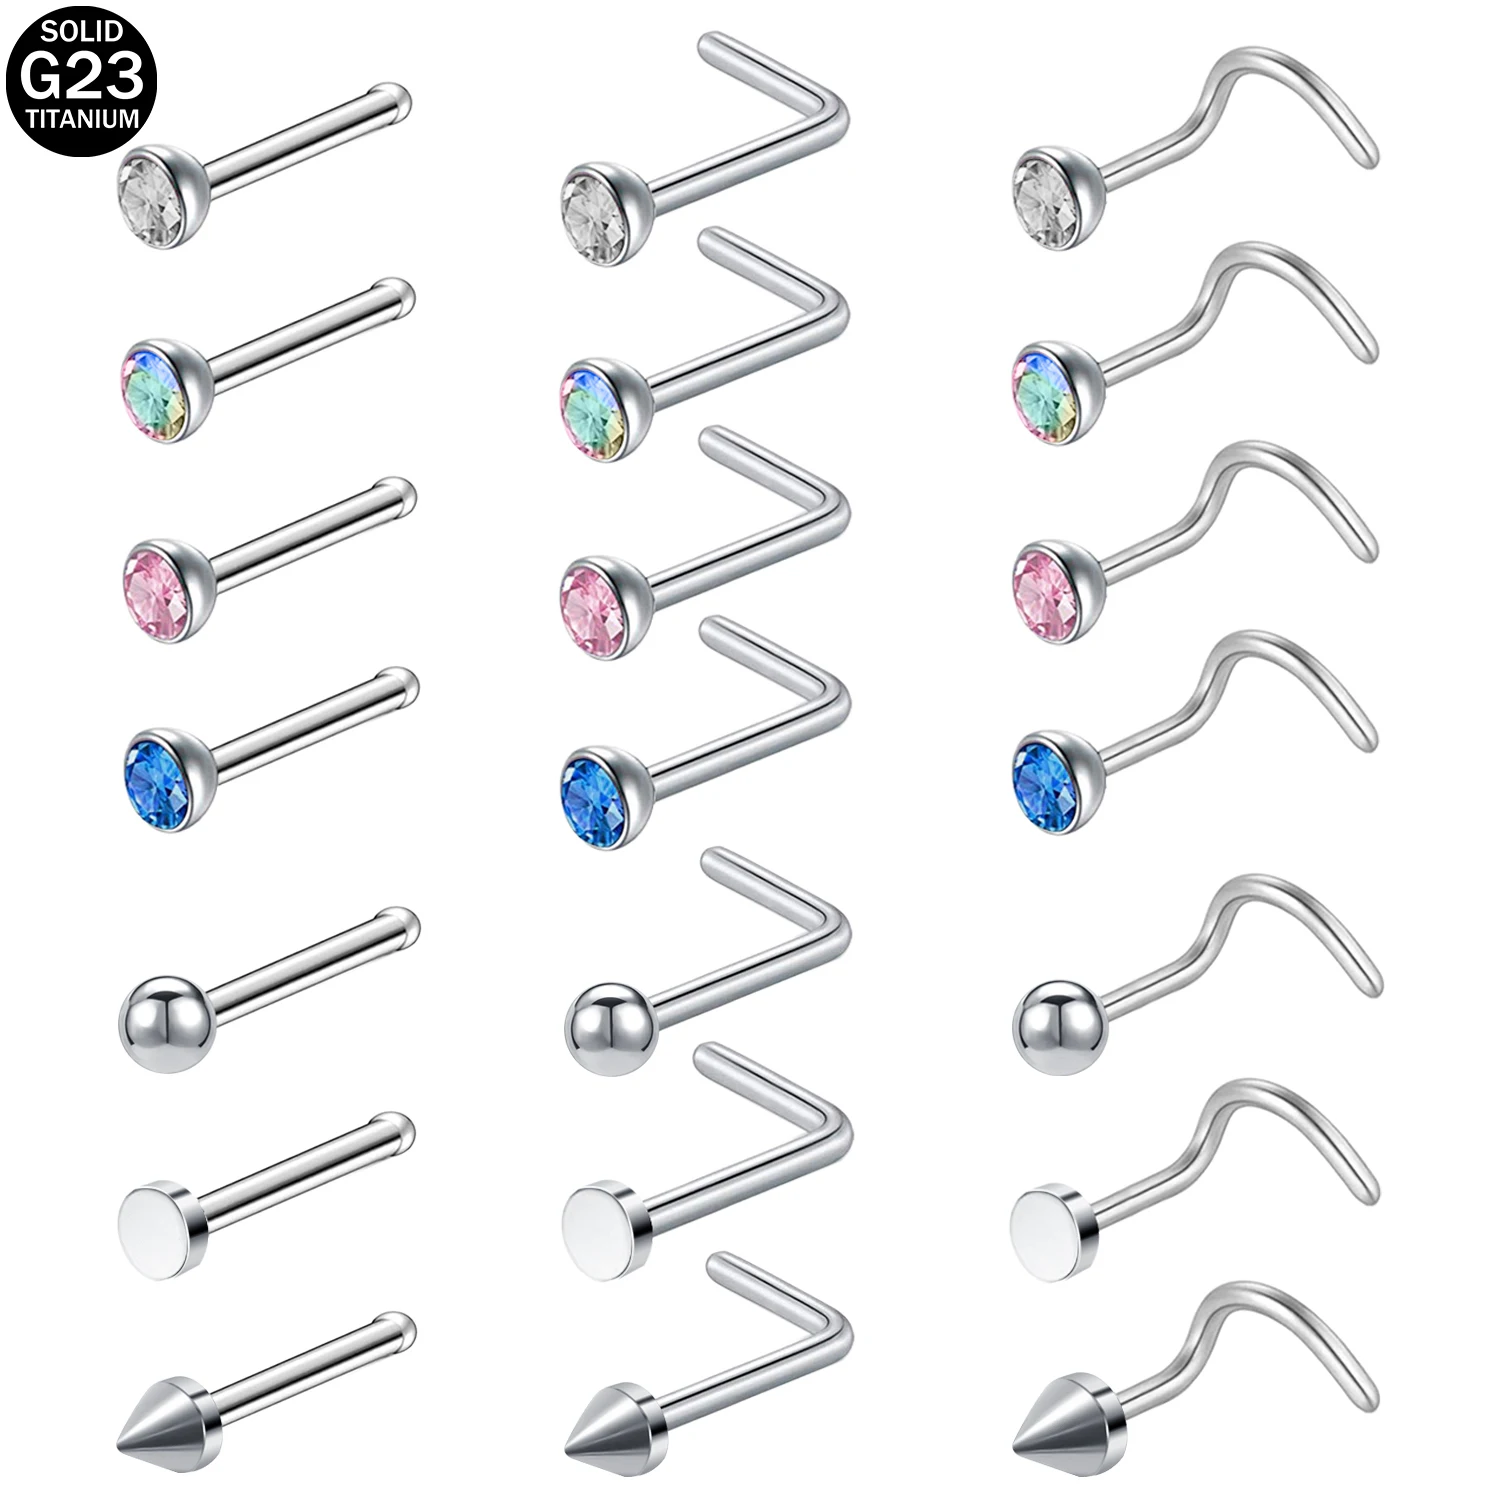 ZS 3-4pcs/lot G23 Titanium Nose Piercing Set 2/3MM Round CZ Crystal Nose Studs 20g Screw Bone L-Shaped Nostril Piercing Jewelry